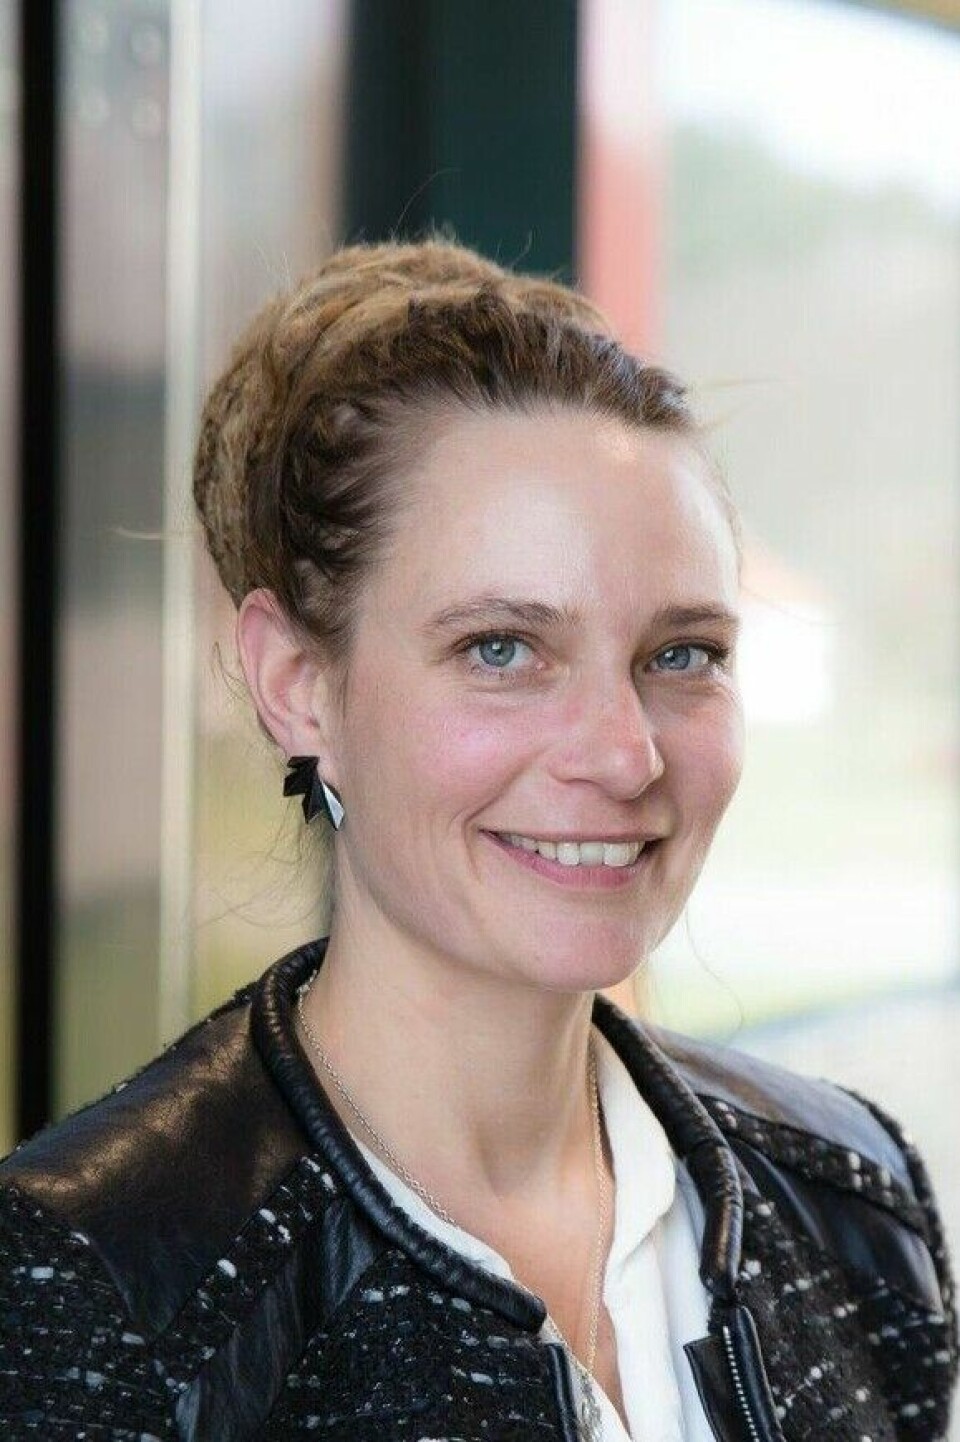 Associate Professor Mikaela Vasstrøm at the Department of Global Development and Planning, University of Agder.